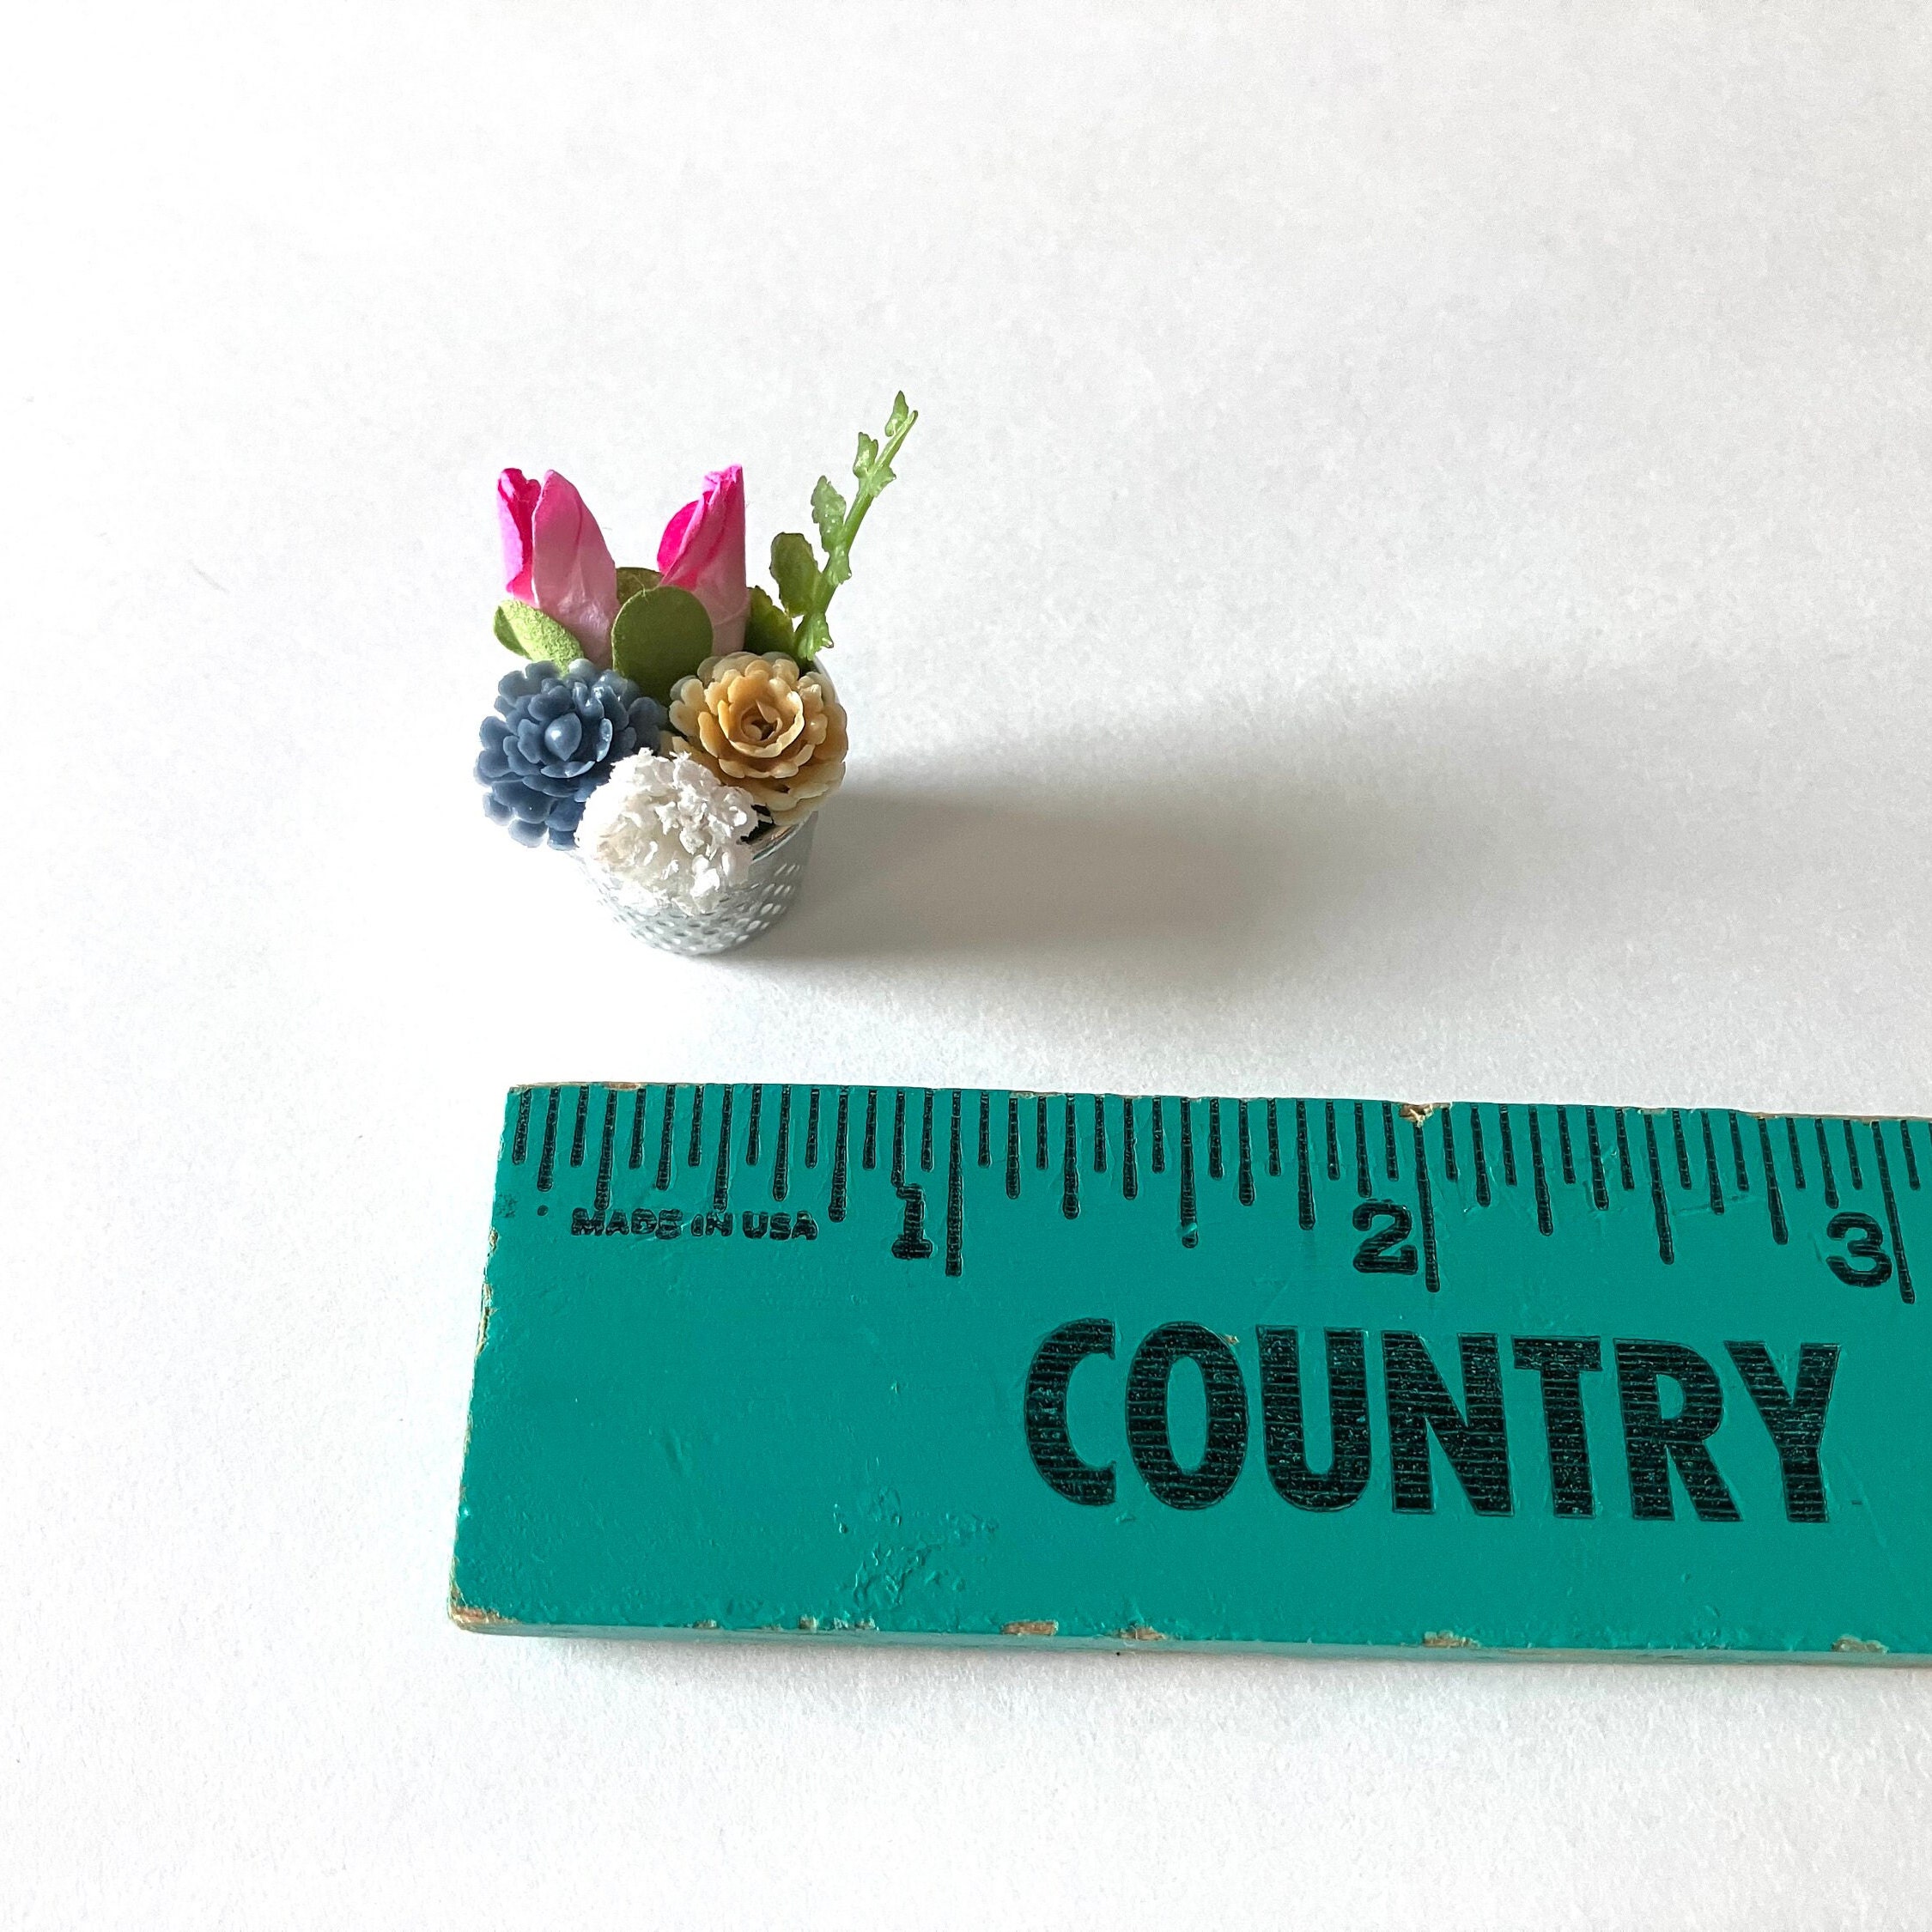 Tiny Spring Bouquet/ Miniature Bouquet/ Tiny Flowers/ Tiny Bouquet